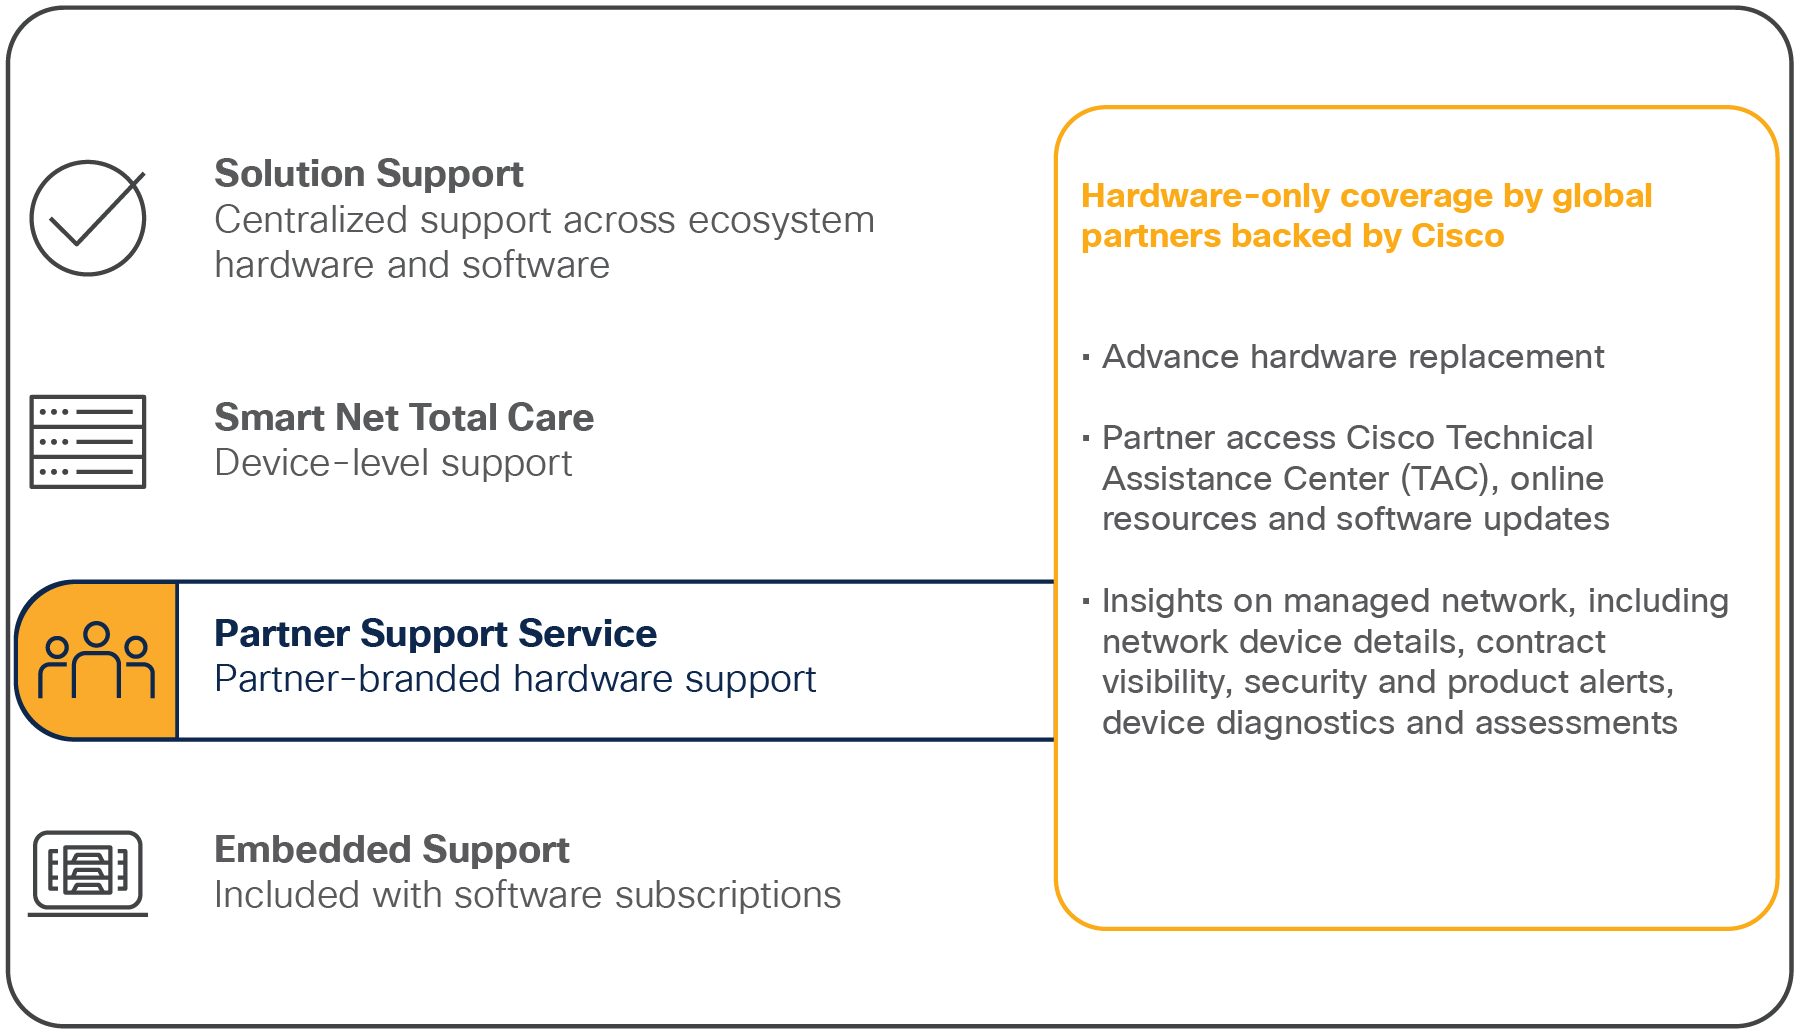 Partner Support Service